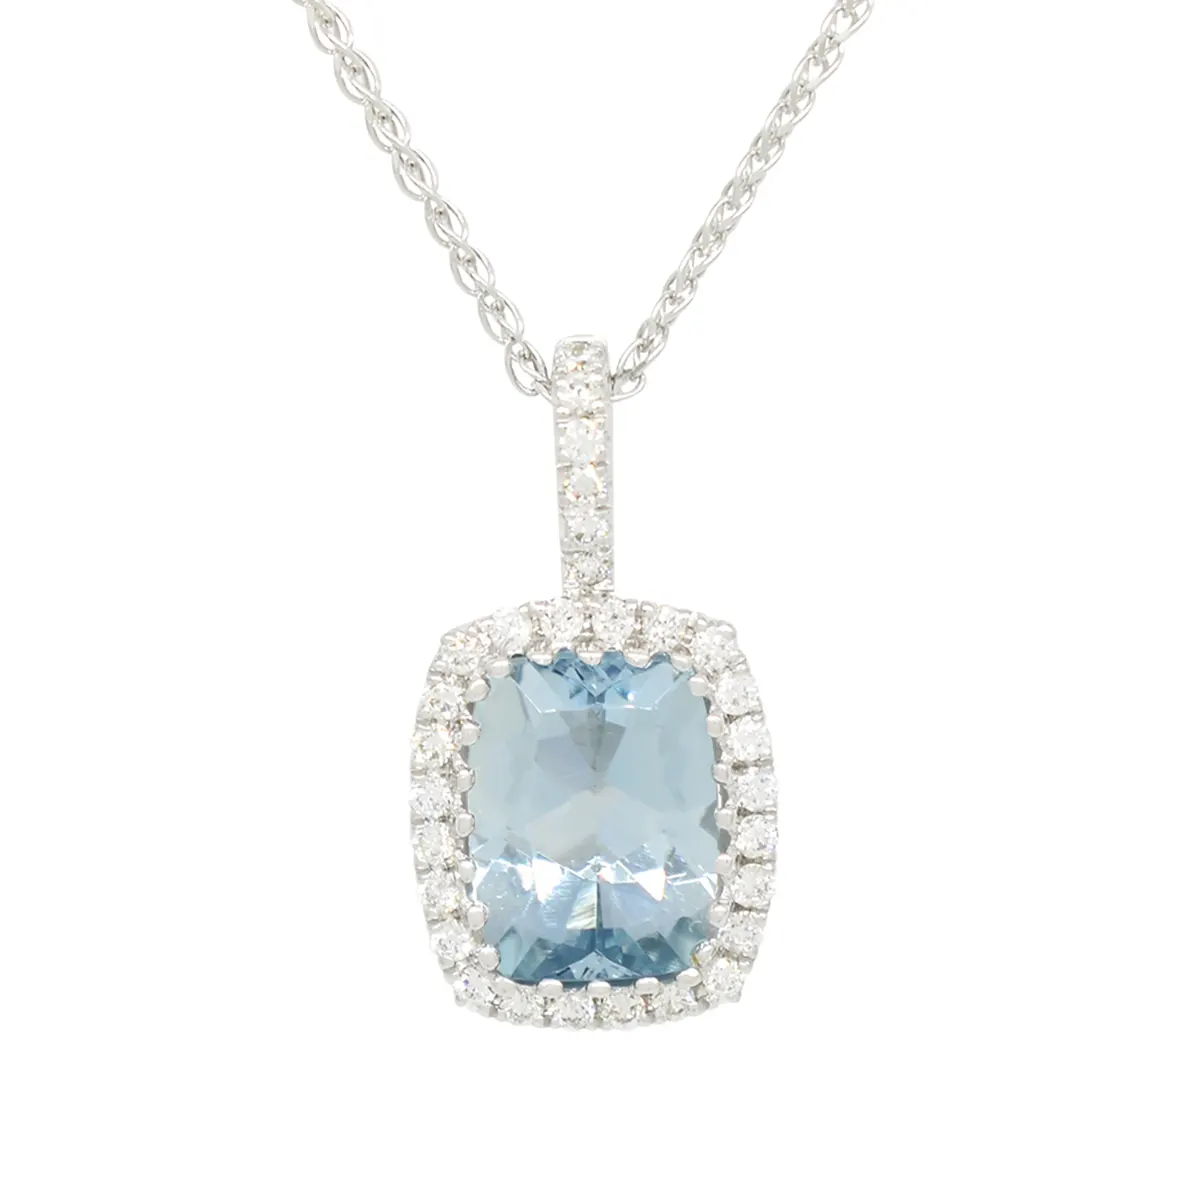 Aquamarine and Diamond Necklace with Stunning Cushion Cut Aquamarine and Diamond Halo